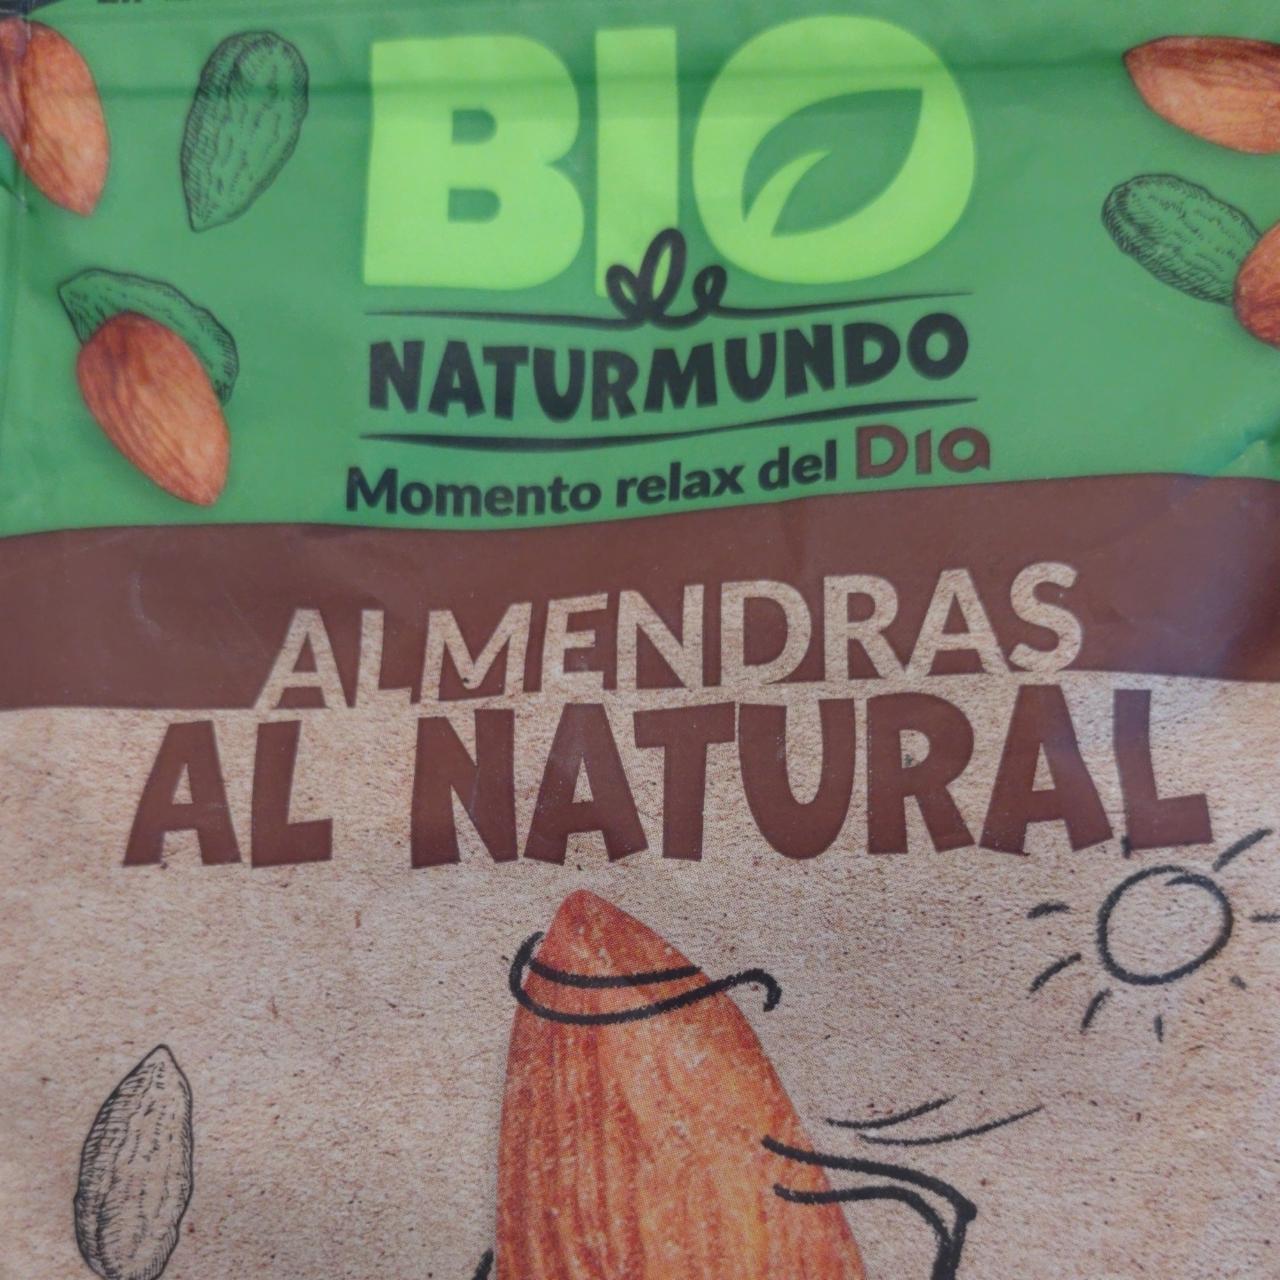 Fotografie - Almendras al natural Bio Naturmundo